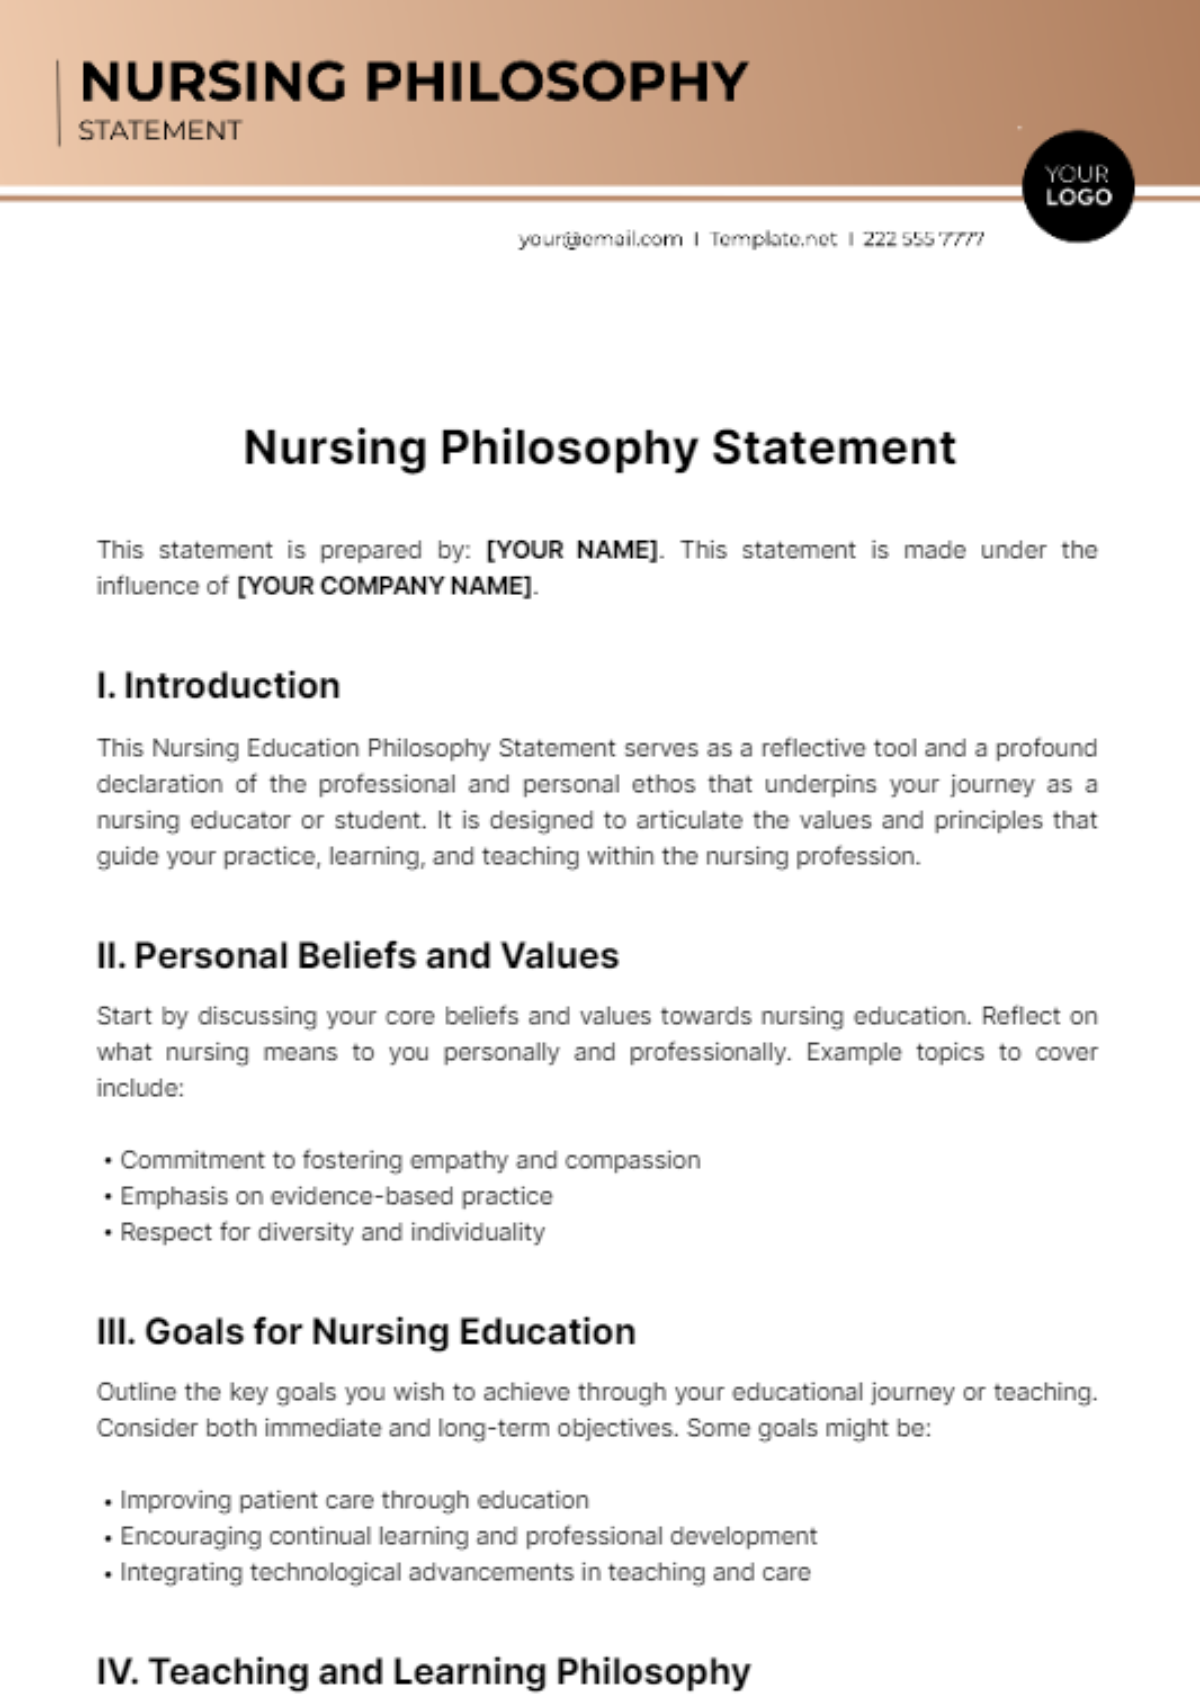 Nursing Philosophy Statement Template